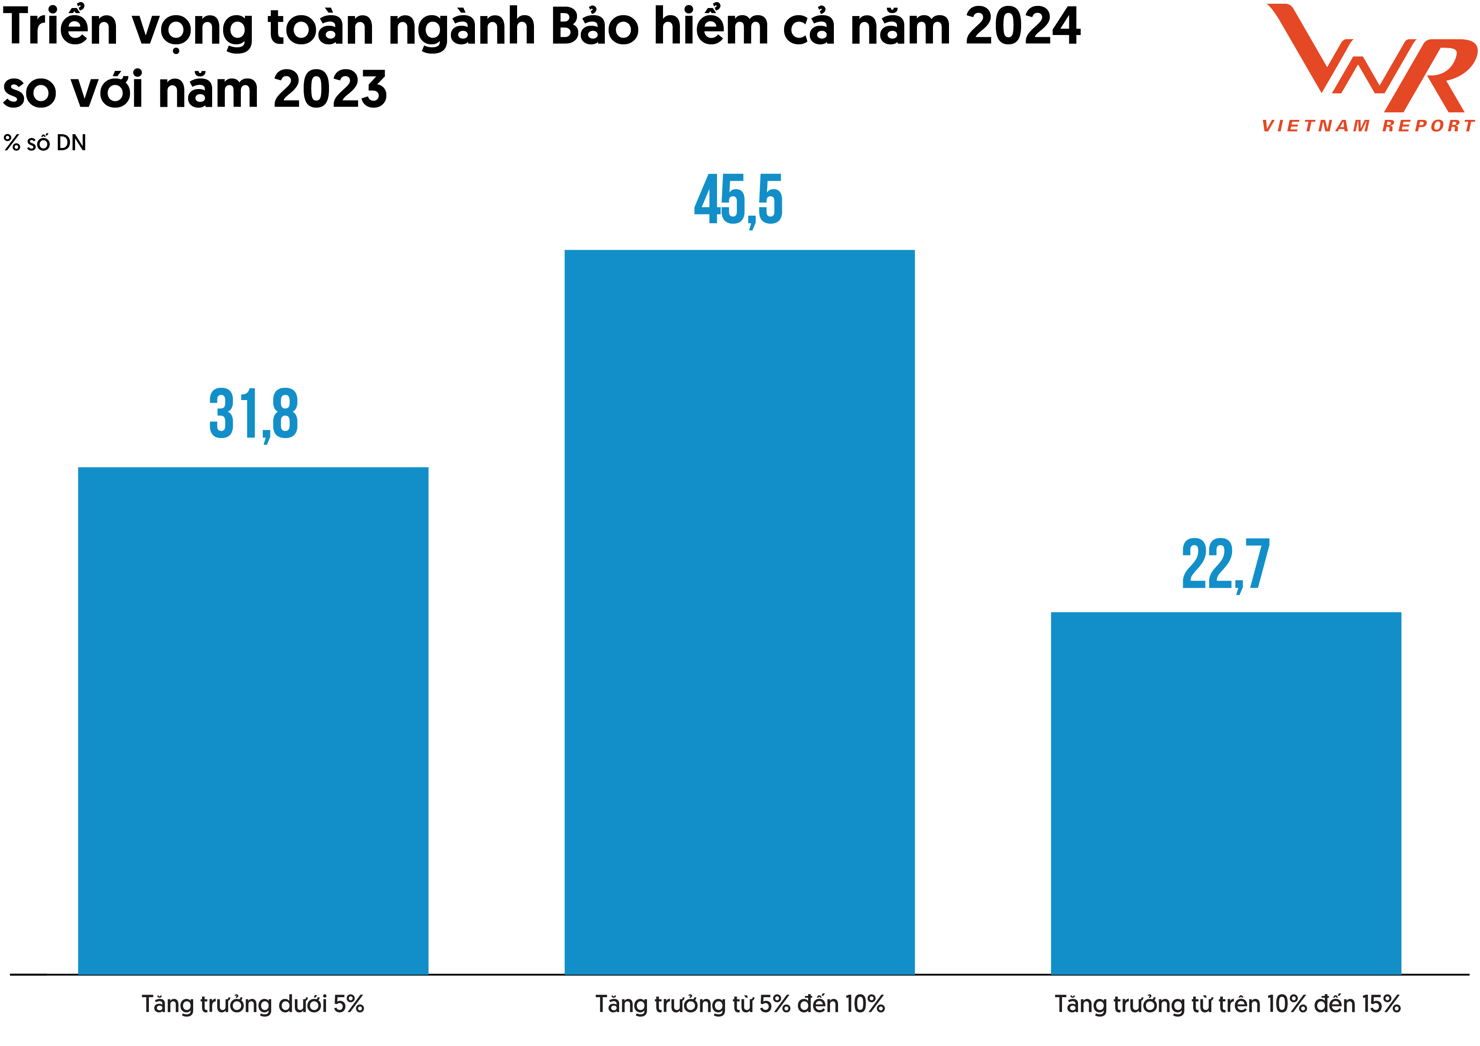 Nguồn: Vietnam Report, Khảo s&aacute;t DNBH, th&aacute;ng 5-6/2024